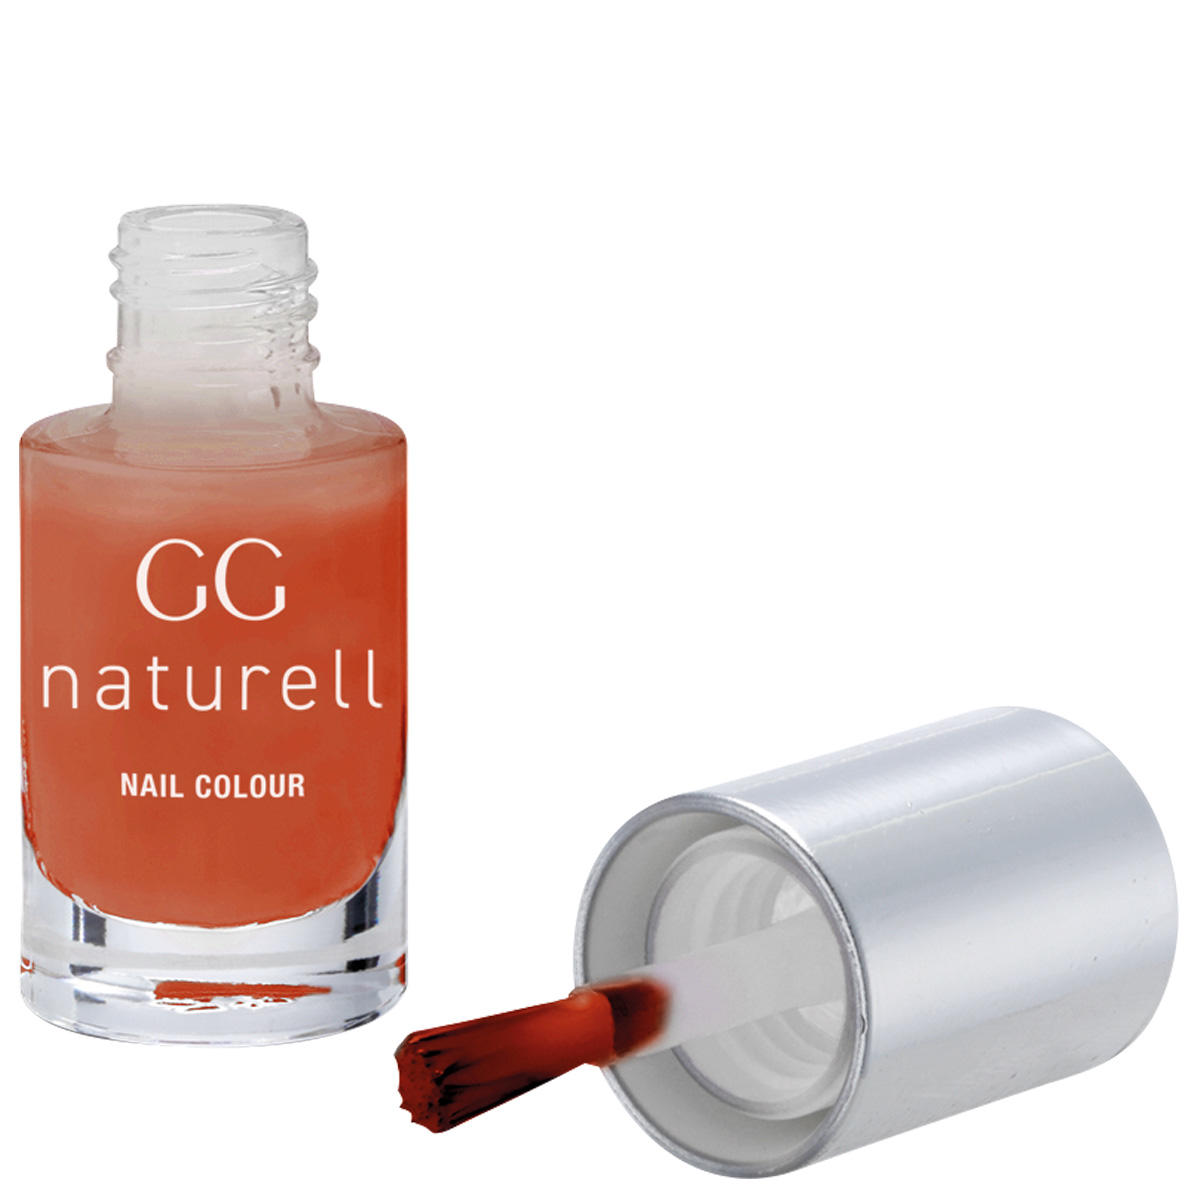 GERTRAUD GRUBER GG naturell Nail Colour 80 Orient 5 ml